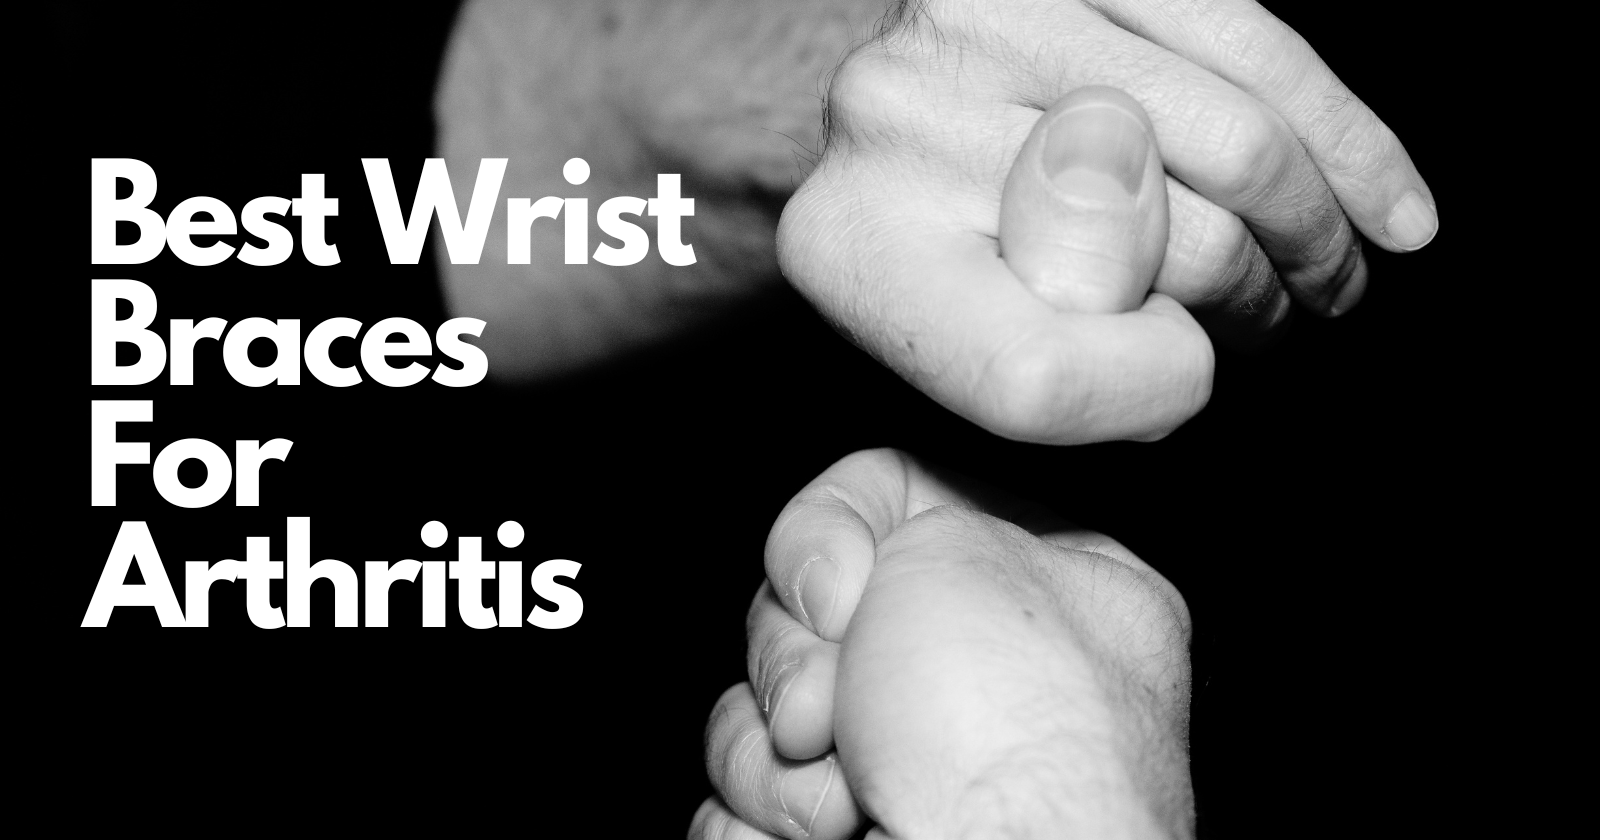 Best Wrist Braces For Arthritis